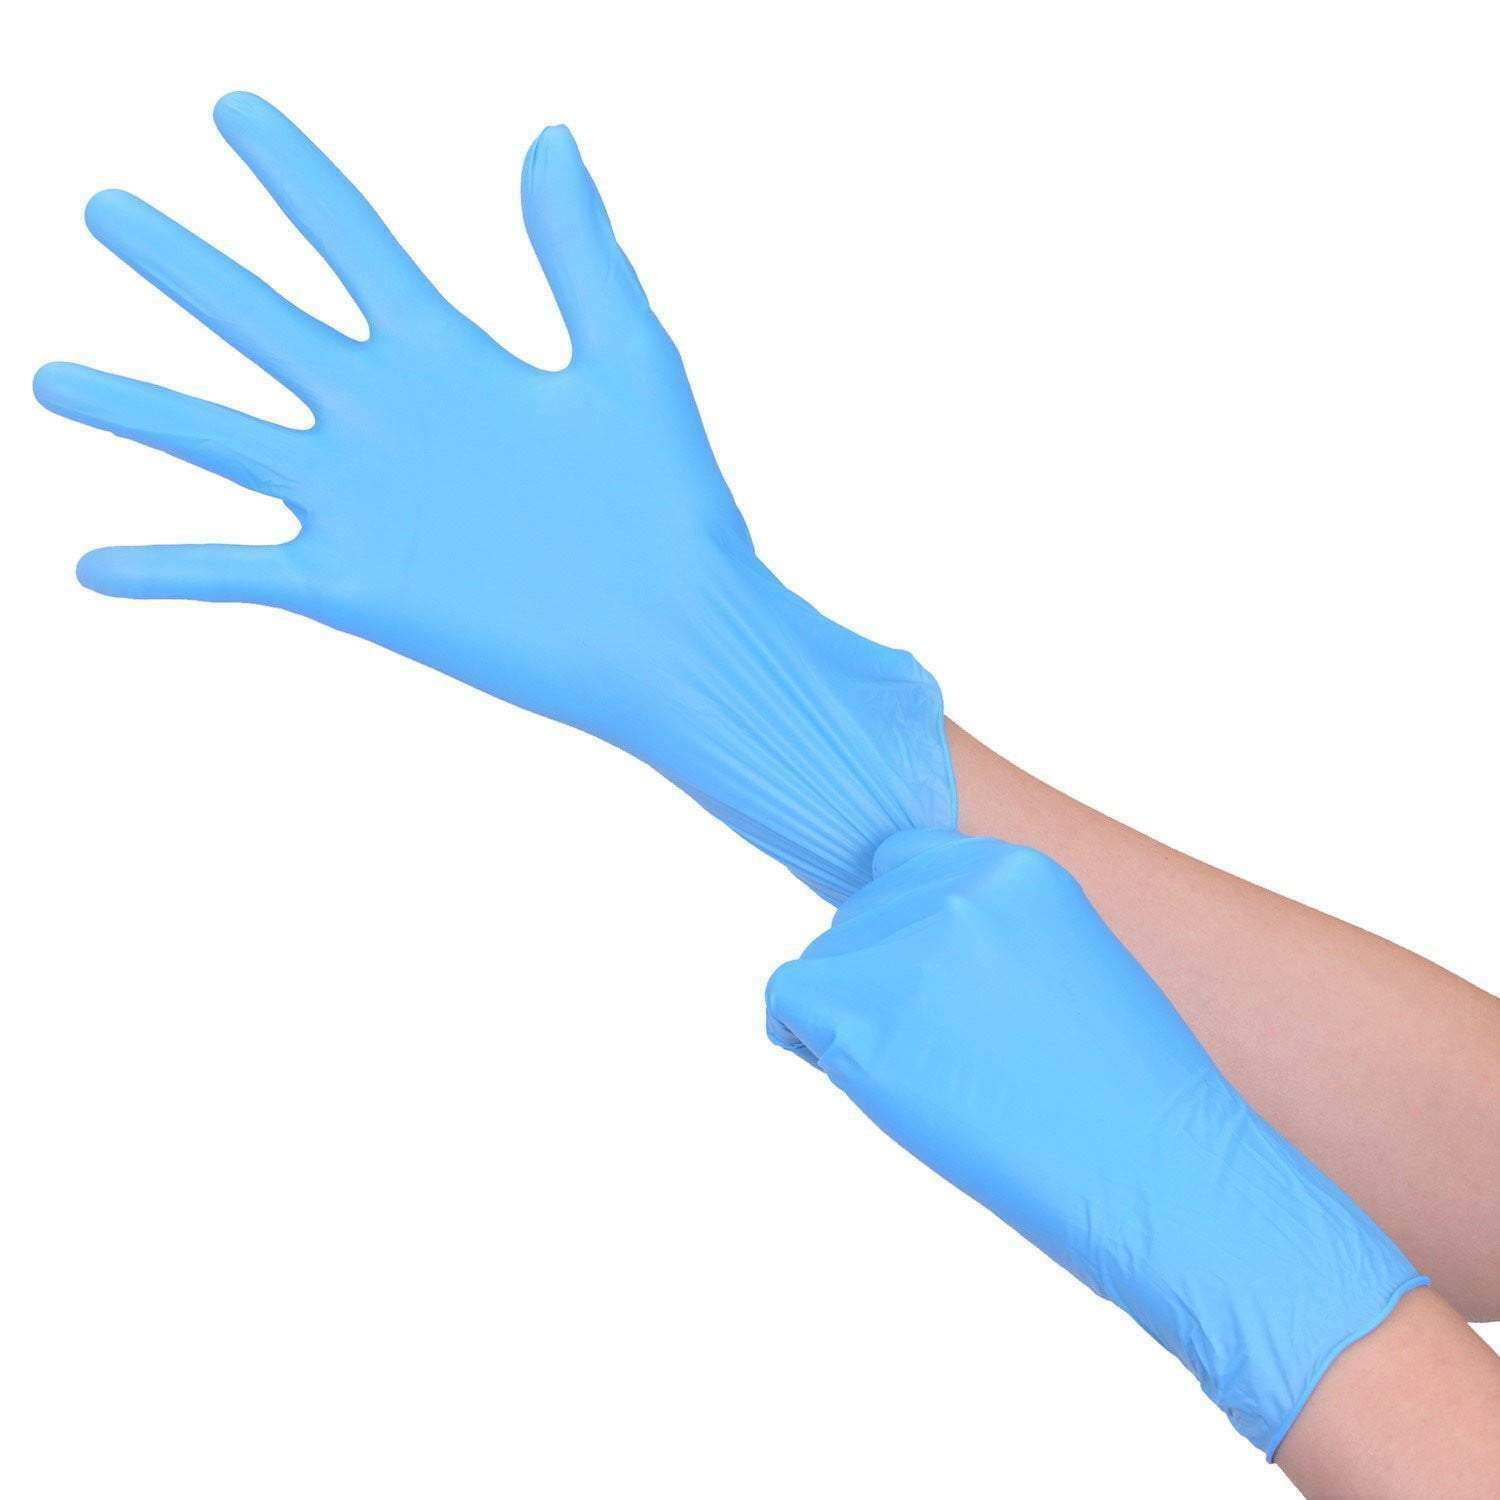 Stretch Vinyl General Purpose Gloves, Powder Free, Blue